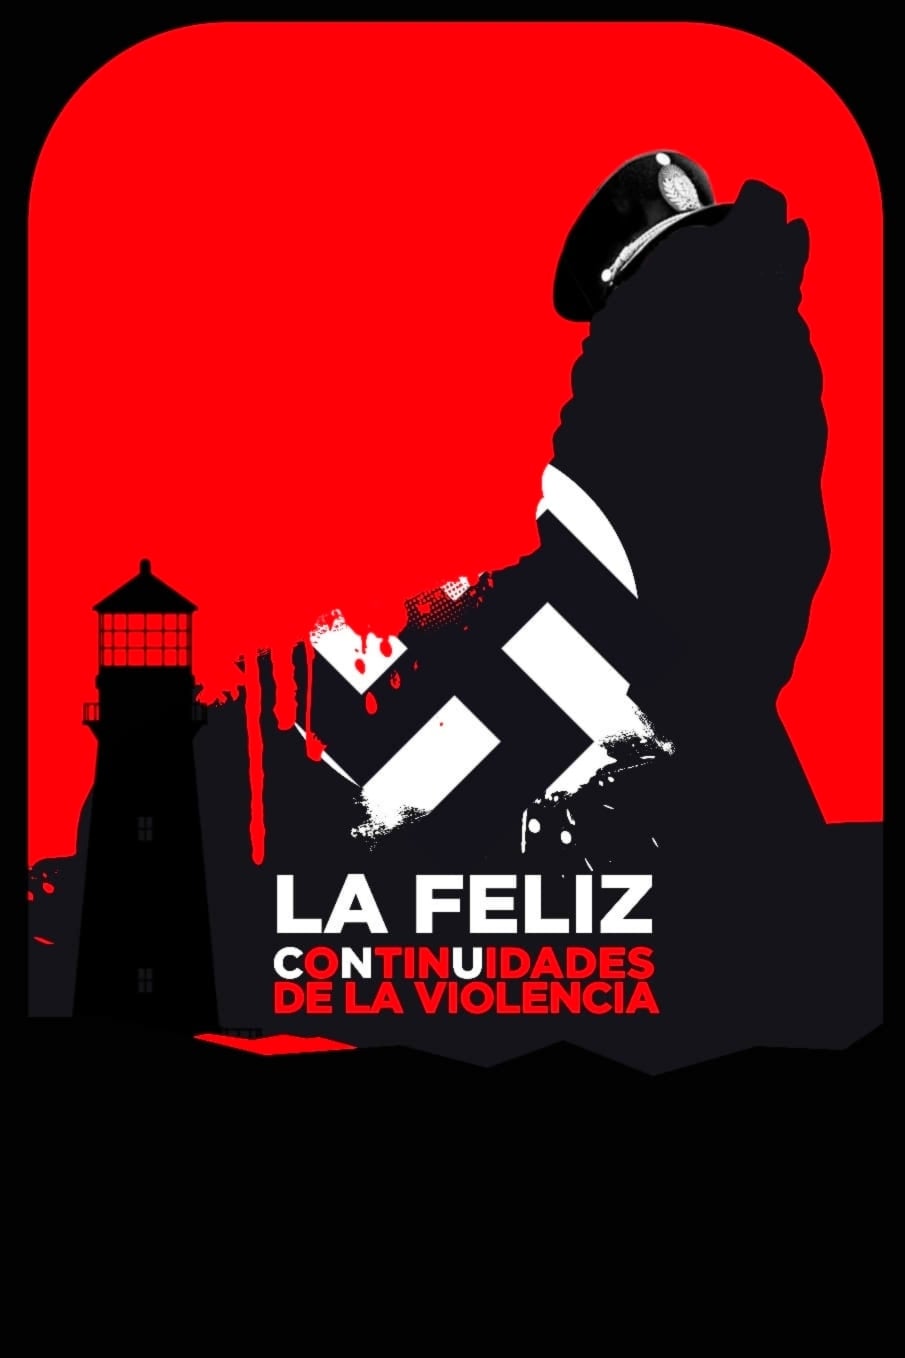 La Feliz: Continuities of Violence